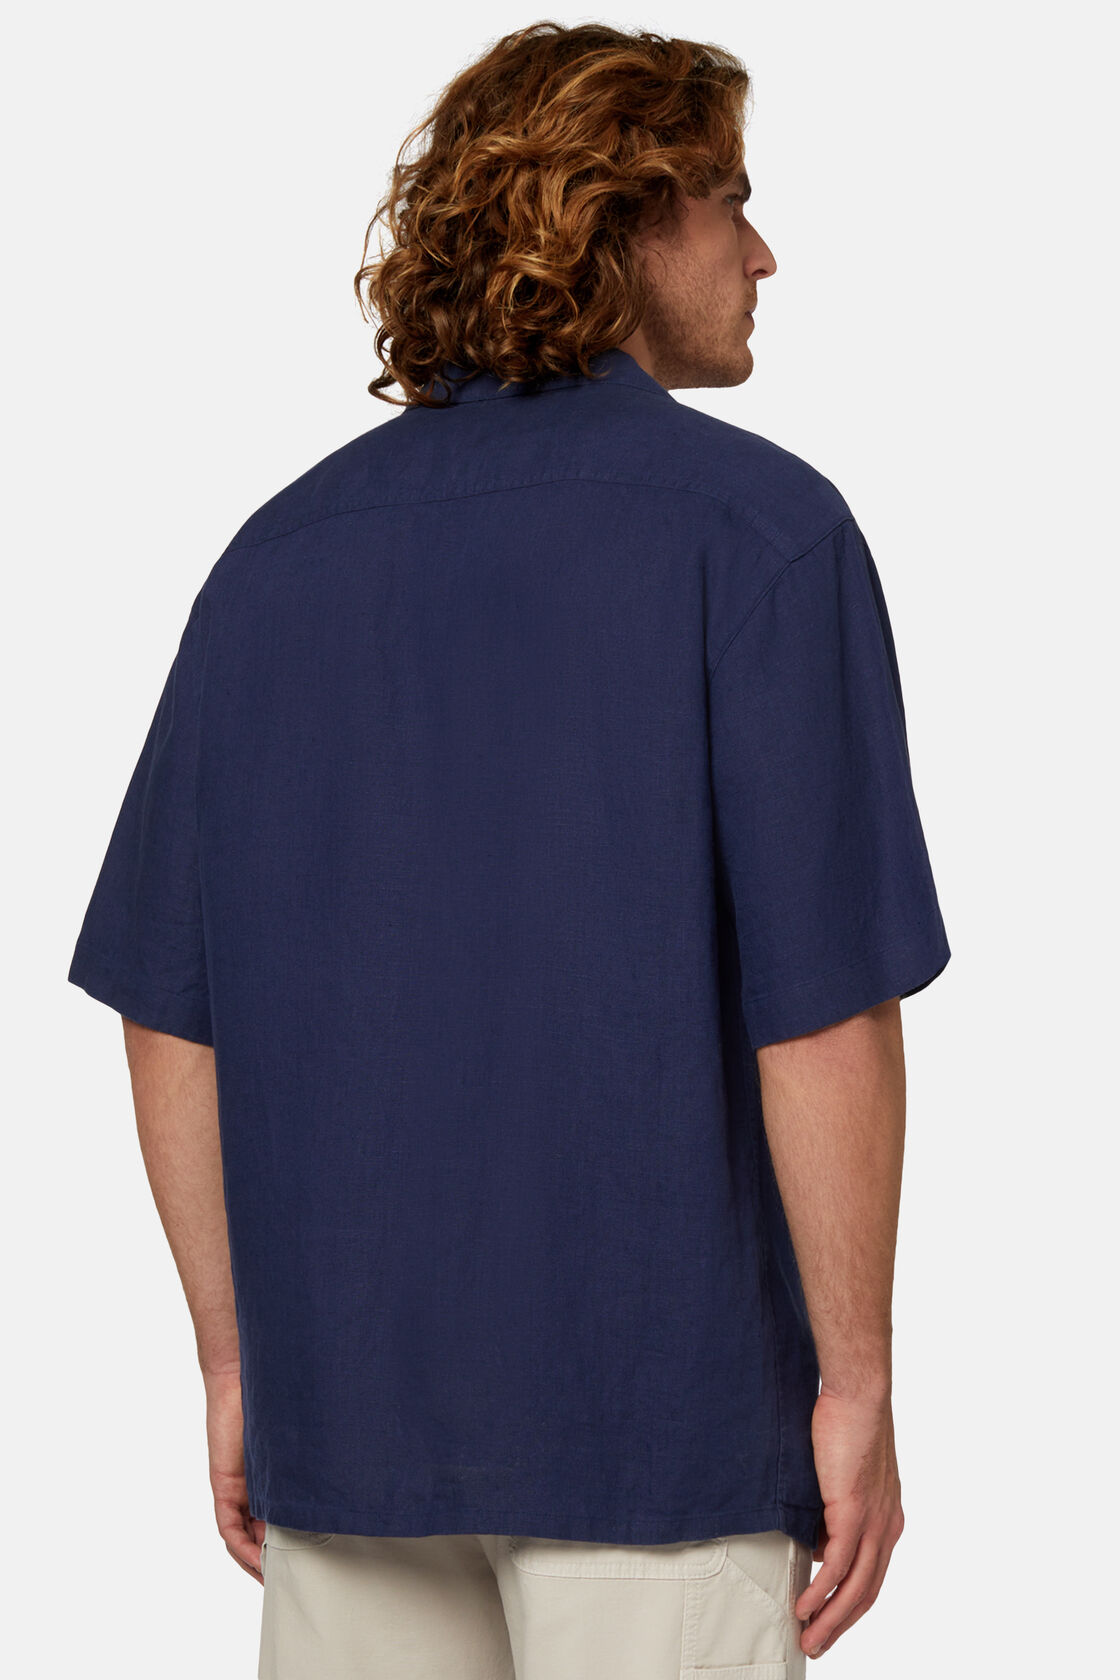 Navy Linen Camp Overshirt, Blue, hi-res